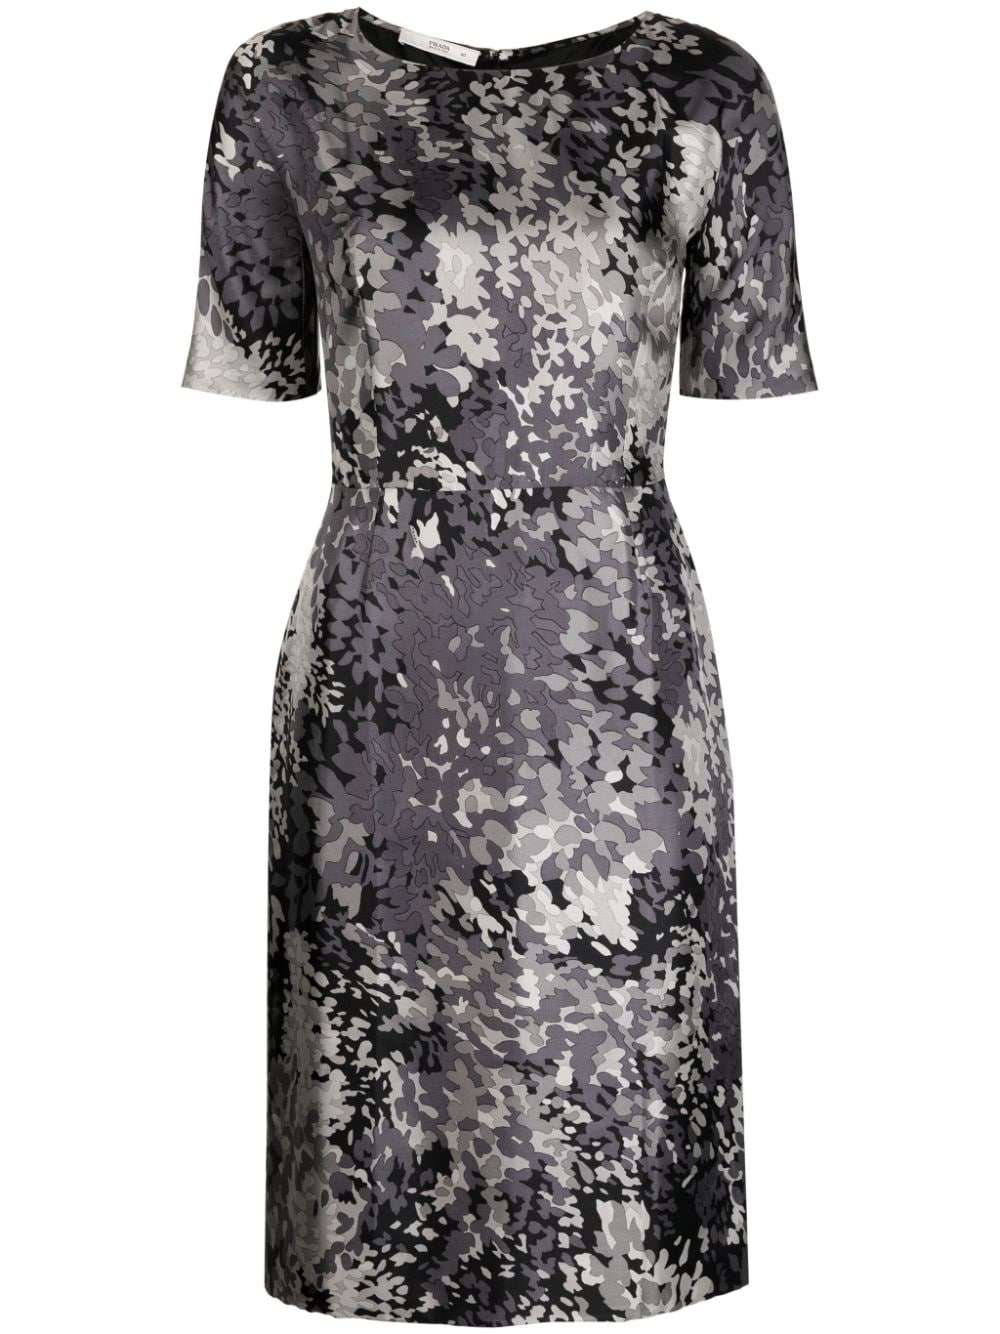 Prada Pre-Owned floral-print silk dress - Grey